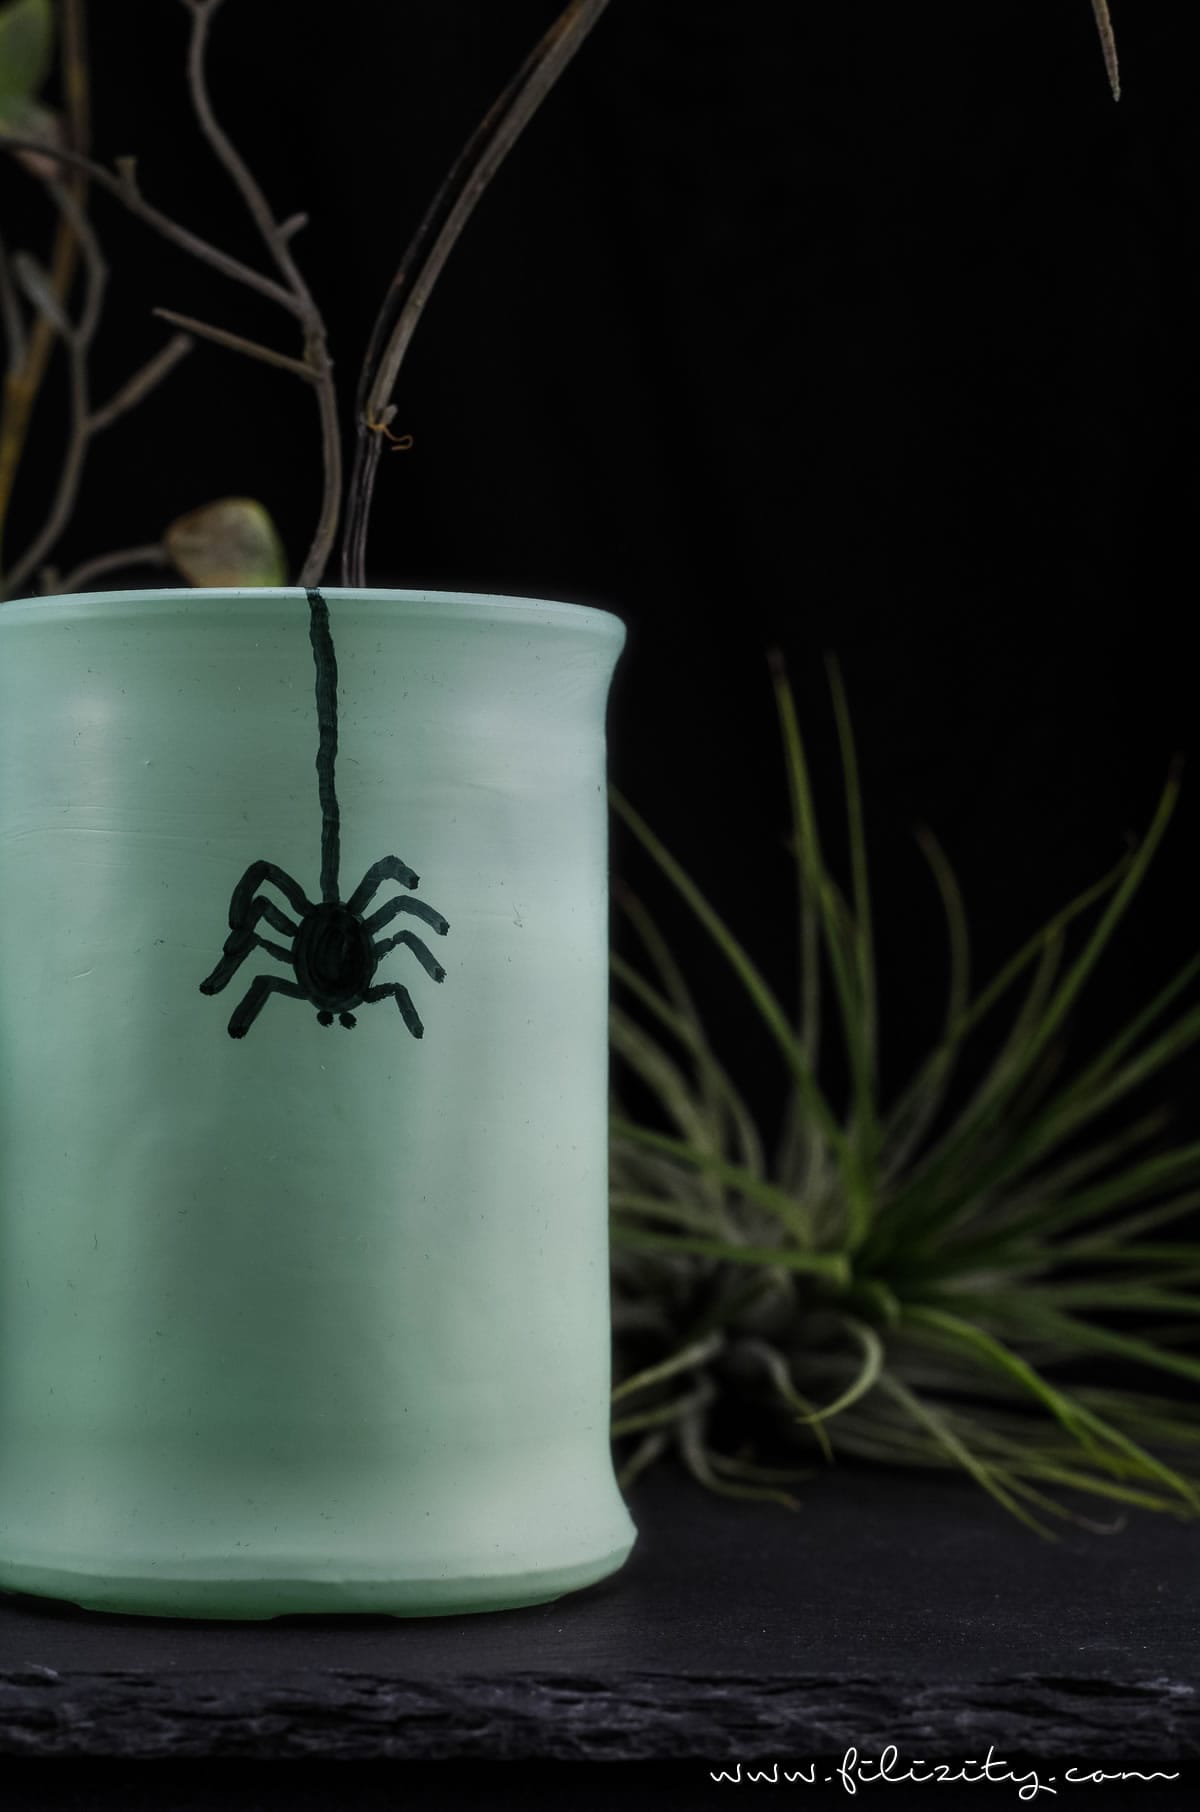 Einfache Halloween Deko Idee: Glow in the dark Vasen selber machen | Filizity.com | DIY-Blog aus dem Rheinland #halloween #deko